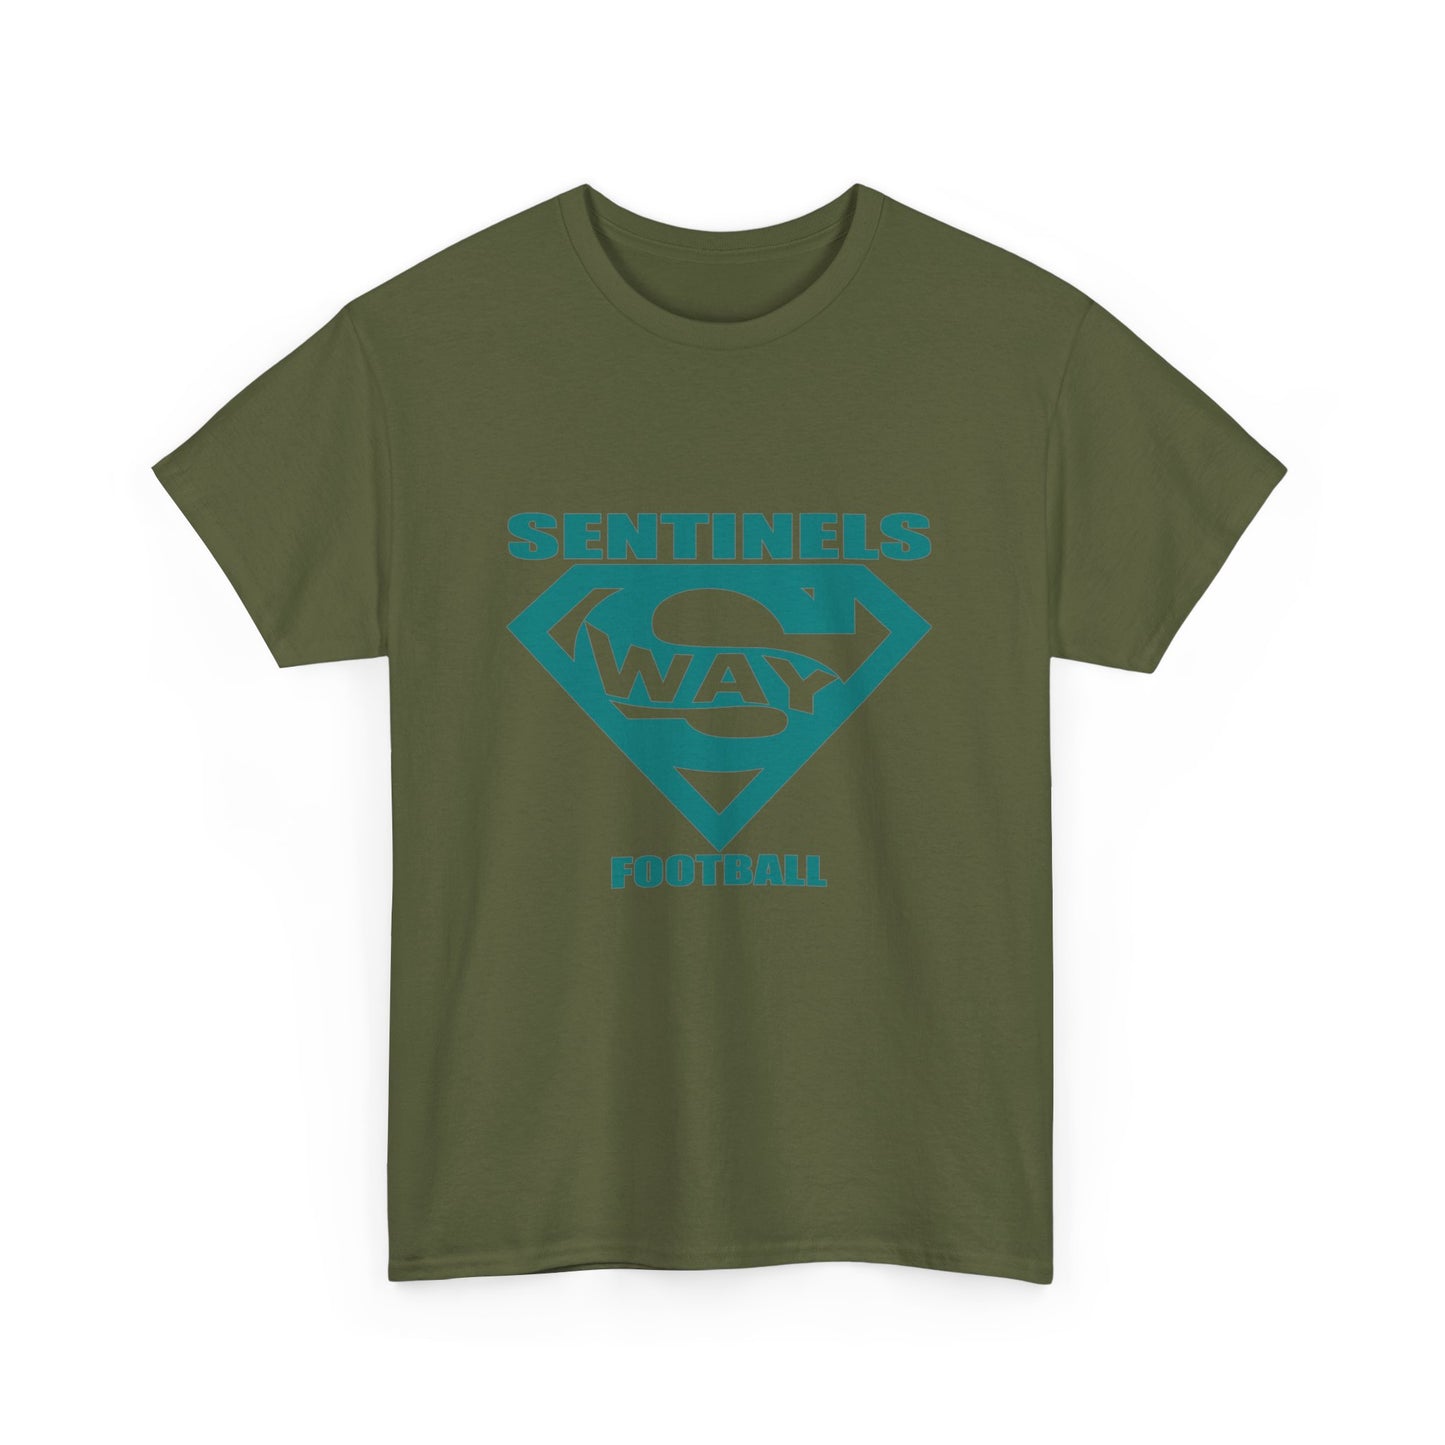 Spanaway Sentinels Football T Shirt